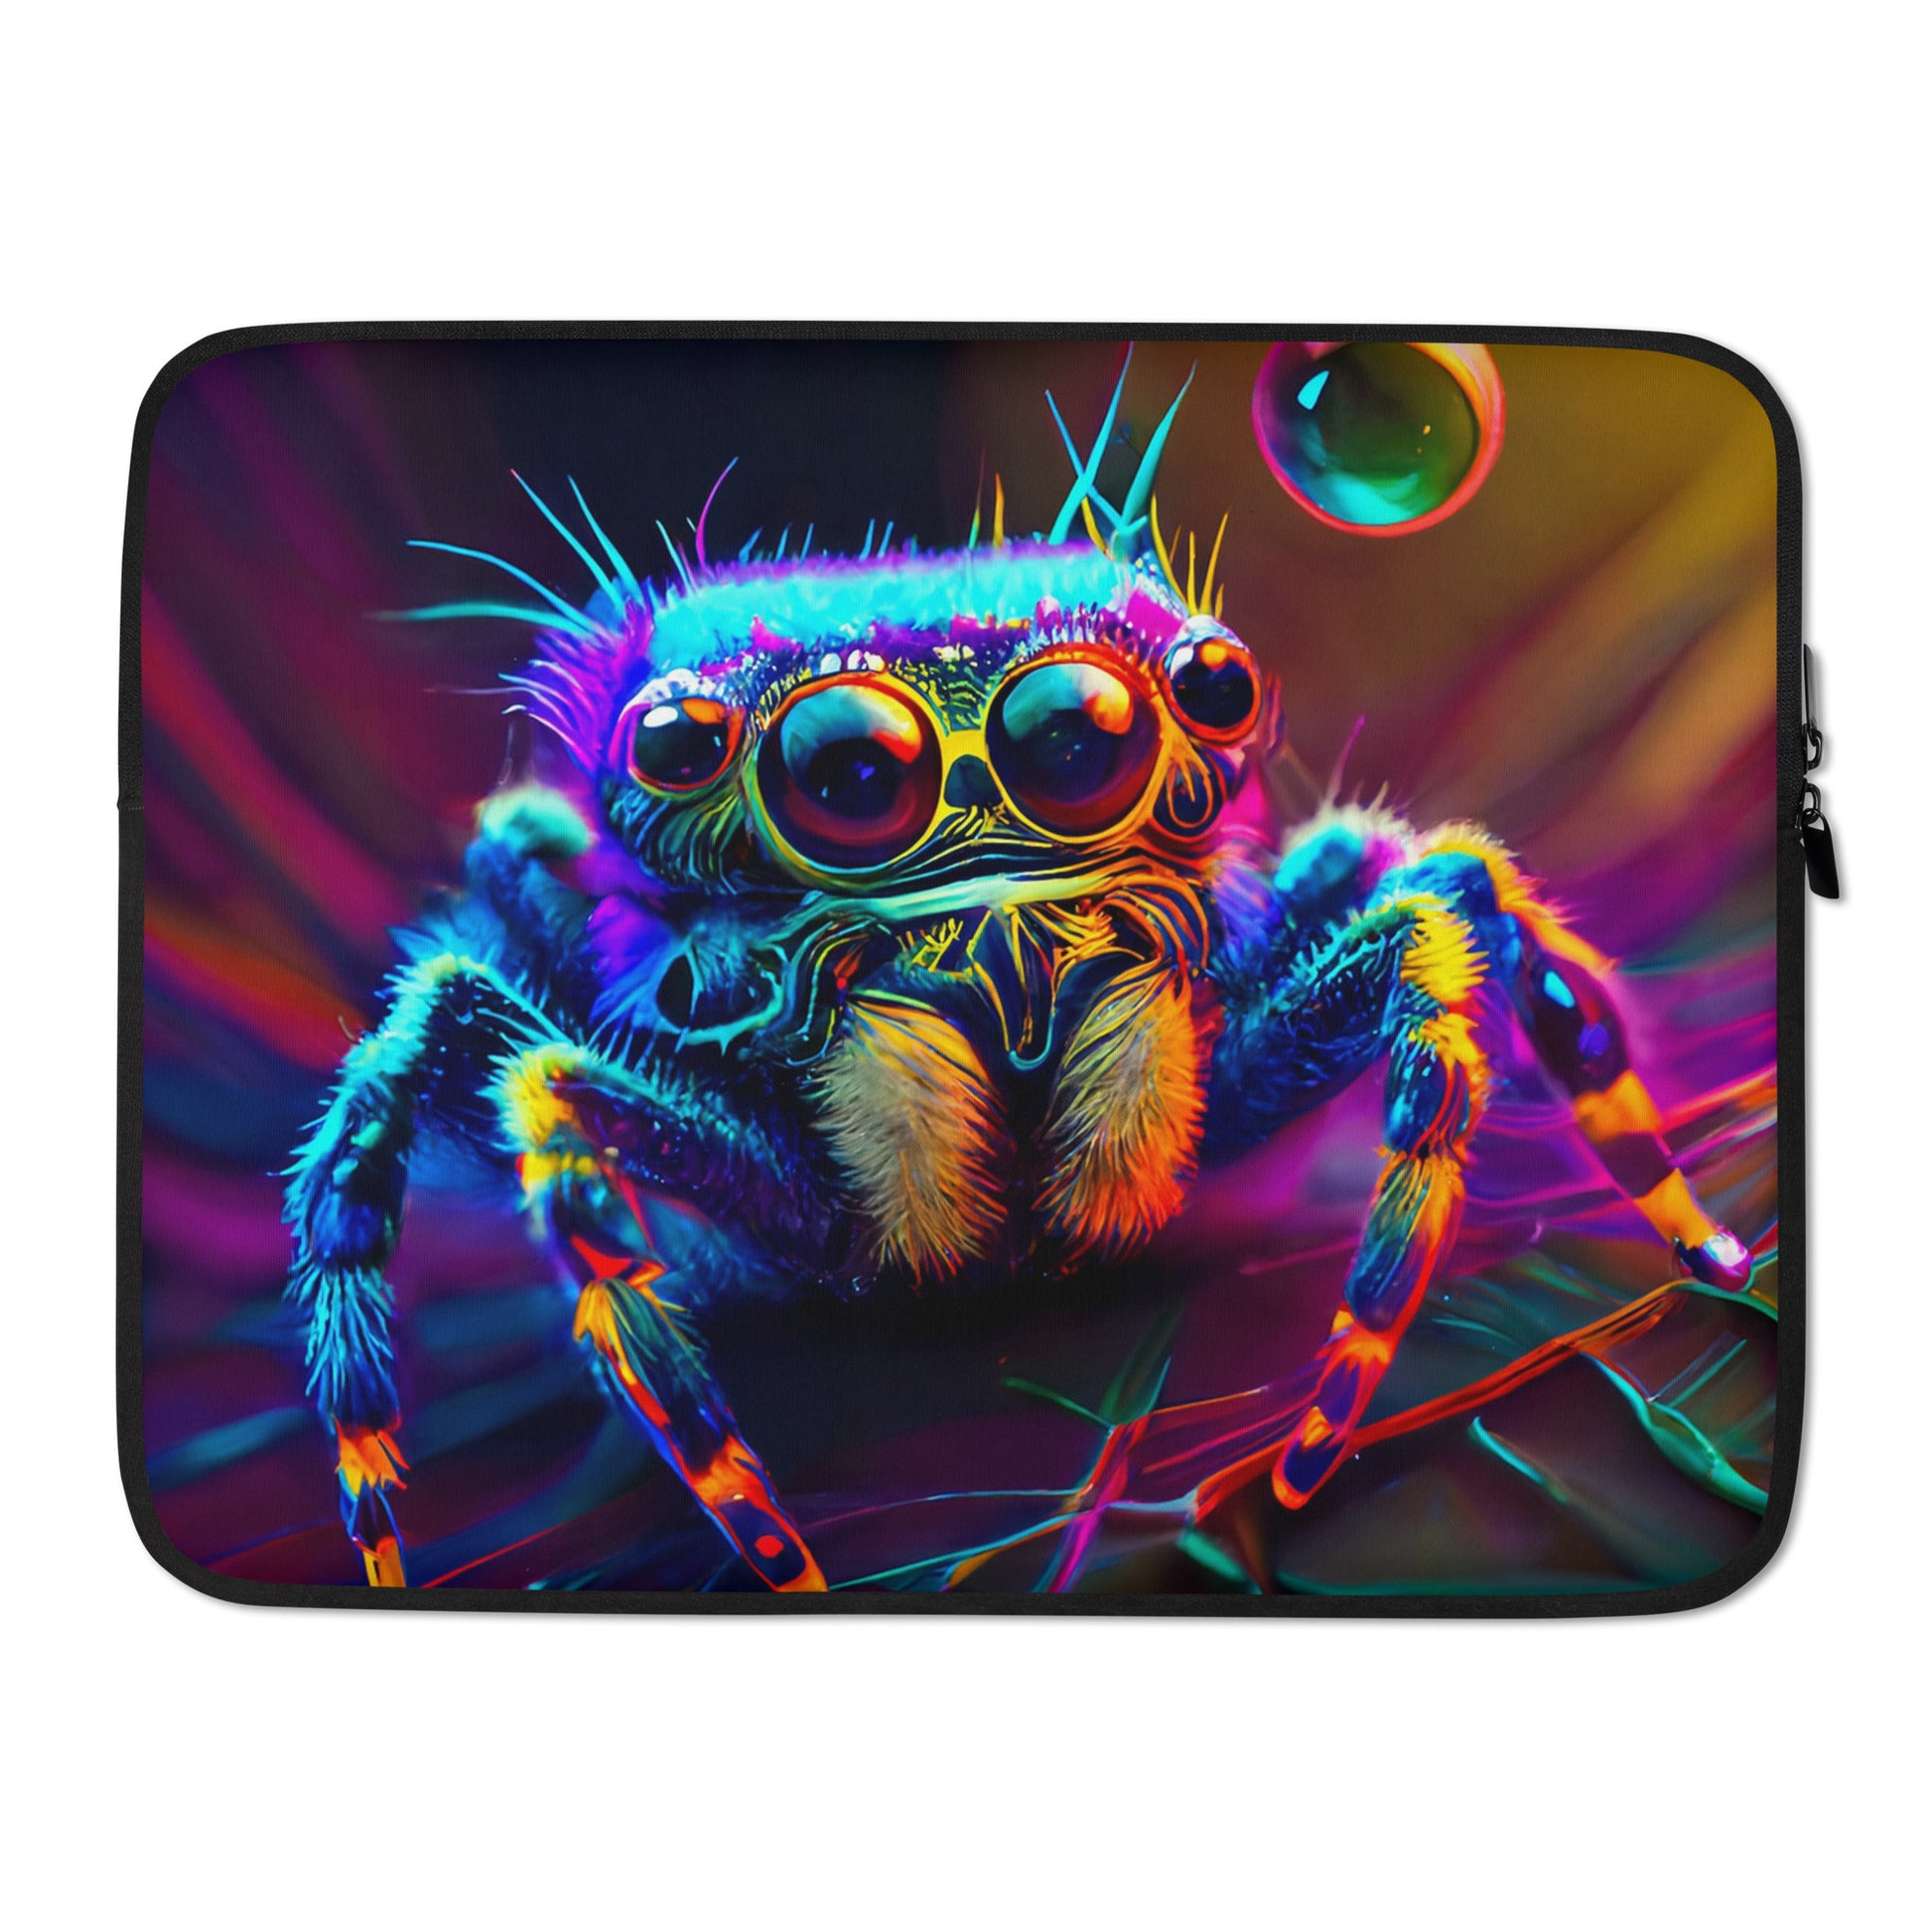 Trippy Regal Jumping Spider Laptop Sleeve - Jumping Spiders For Sale - Spiders Source - #1 Regal Jumping Spider Store